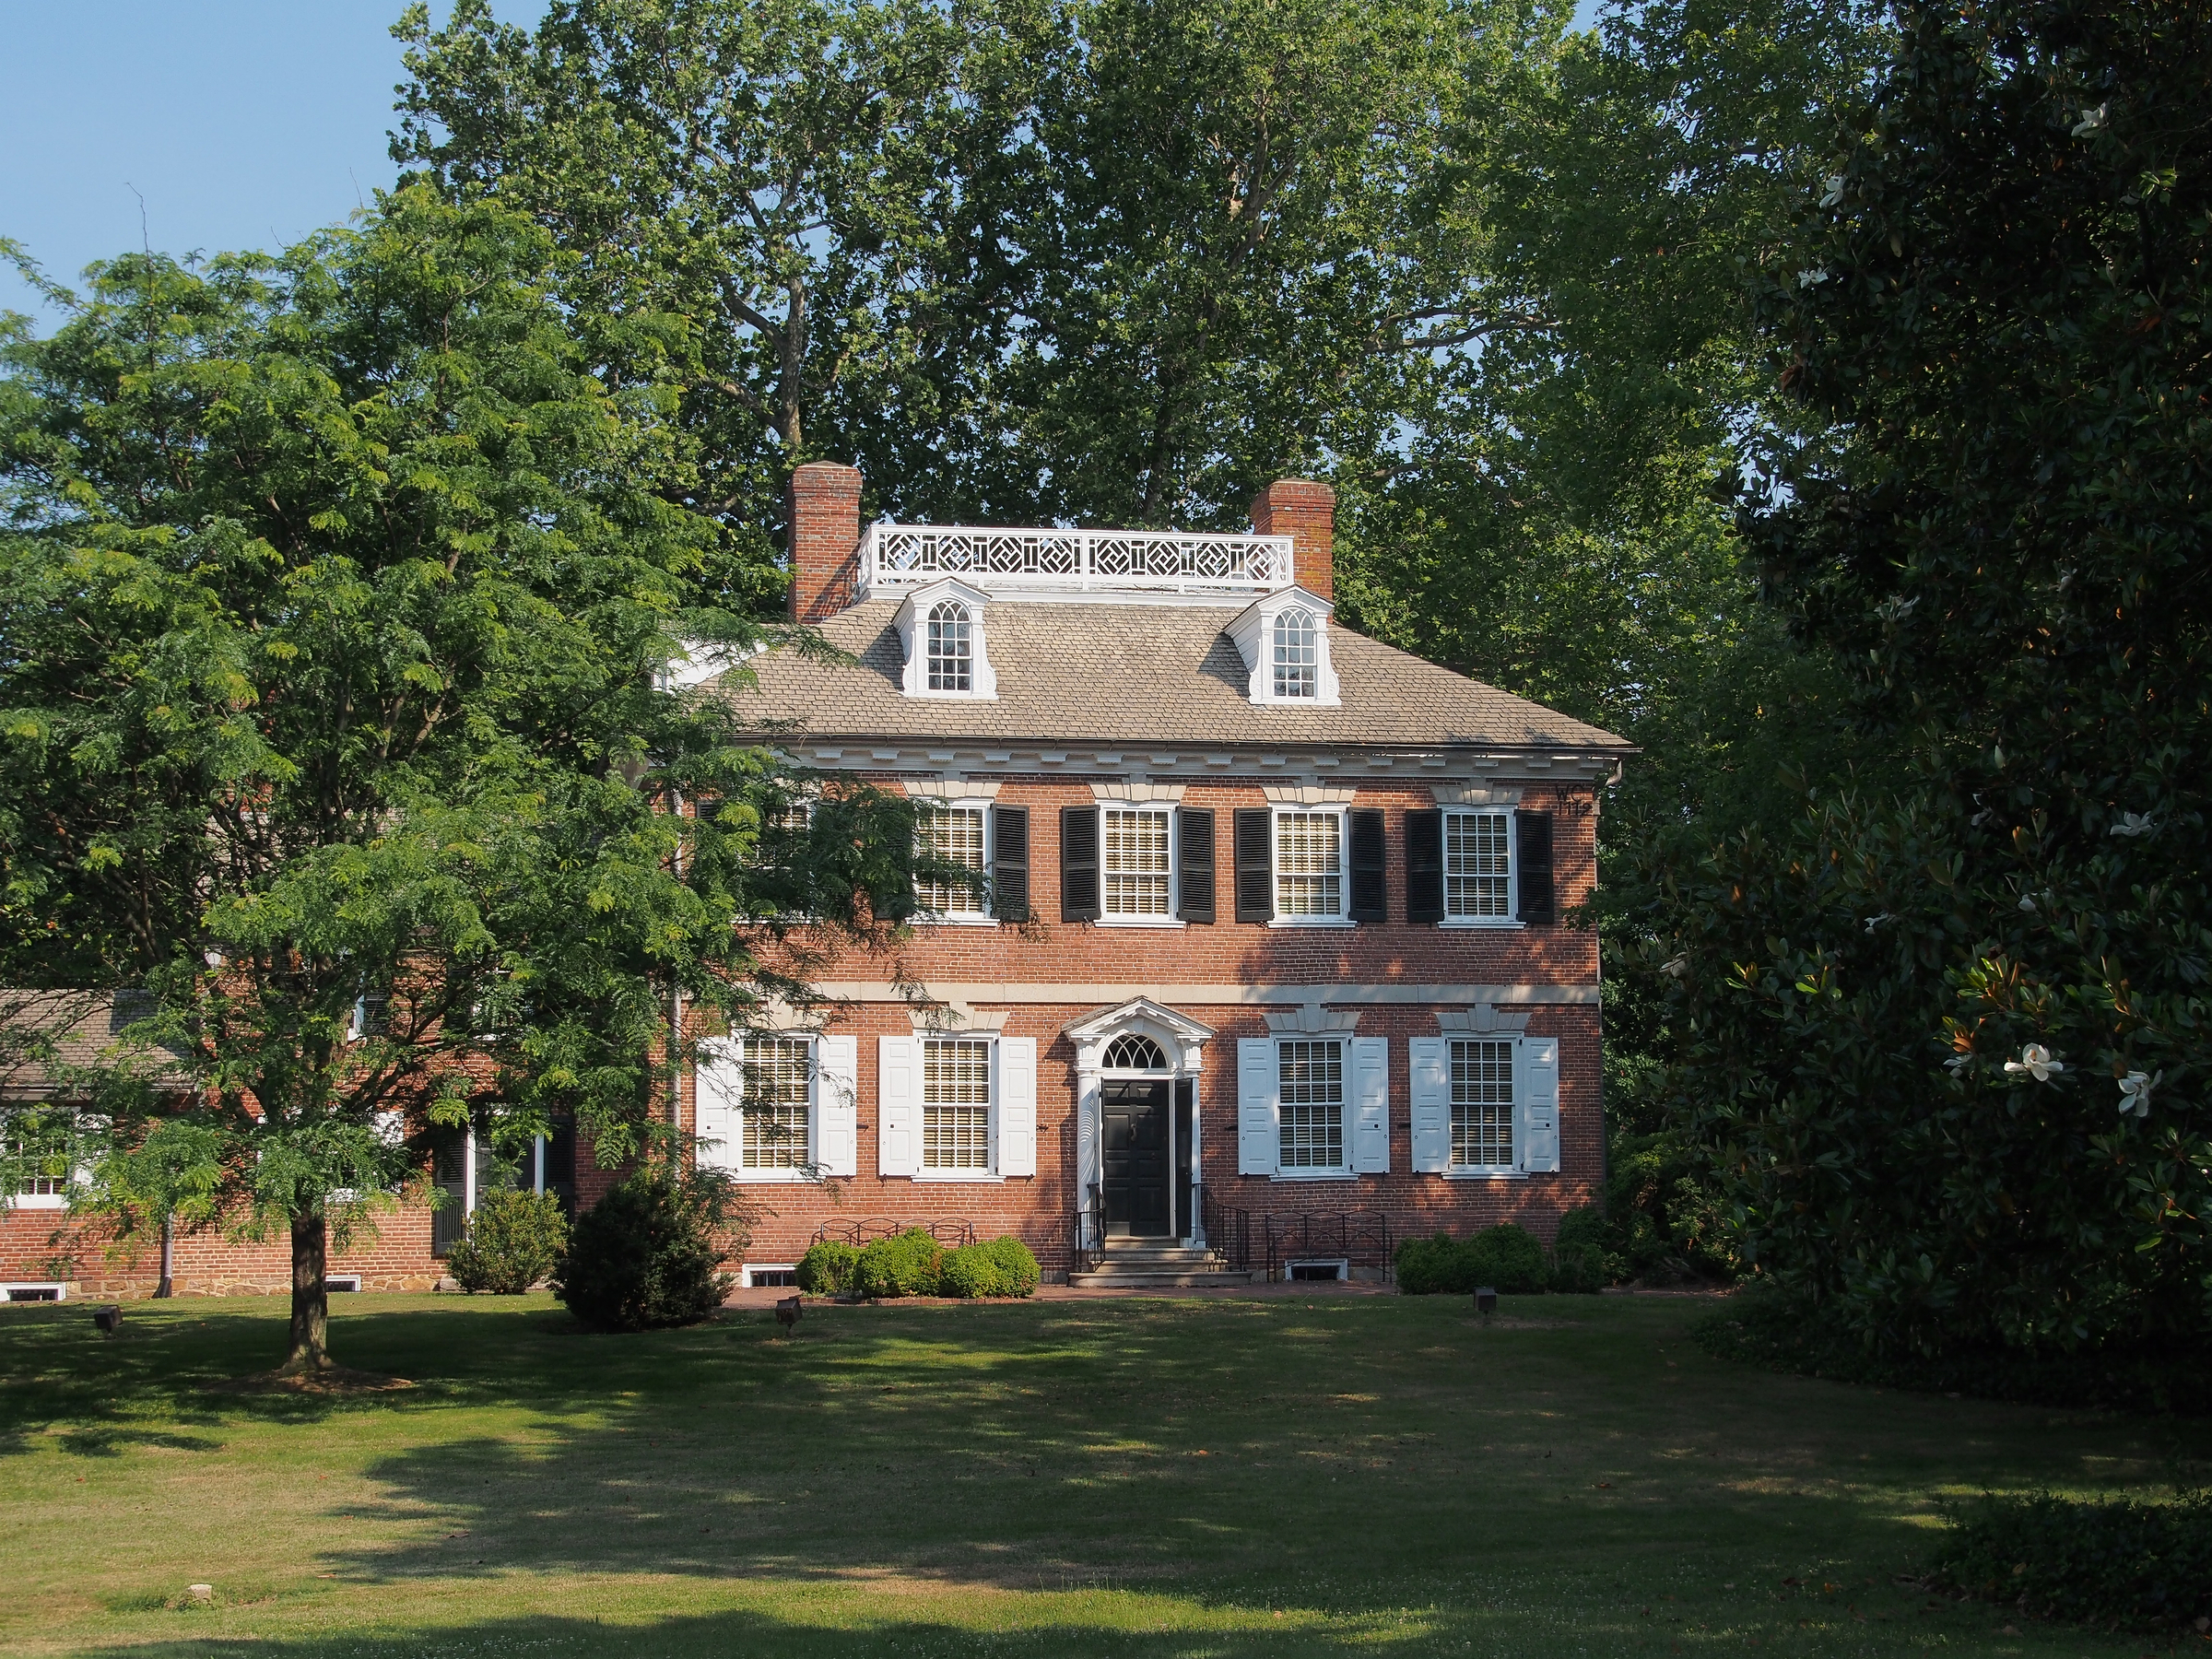 Corbit-Sharp House c. 1774, a National Historic Landmark